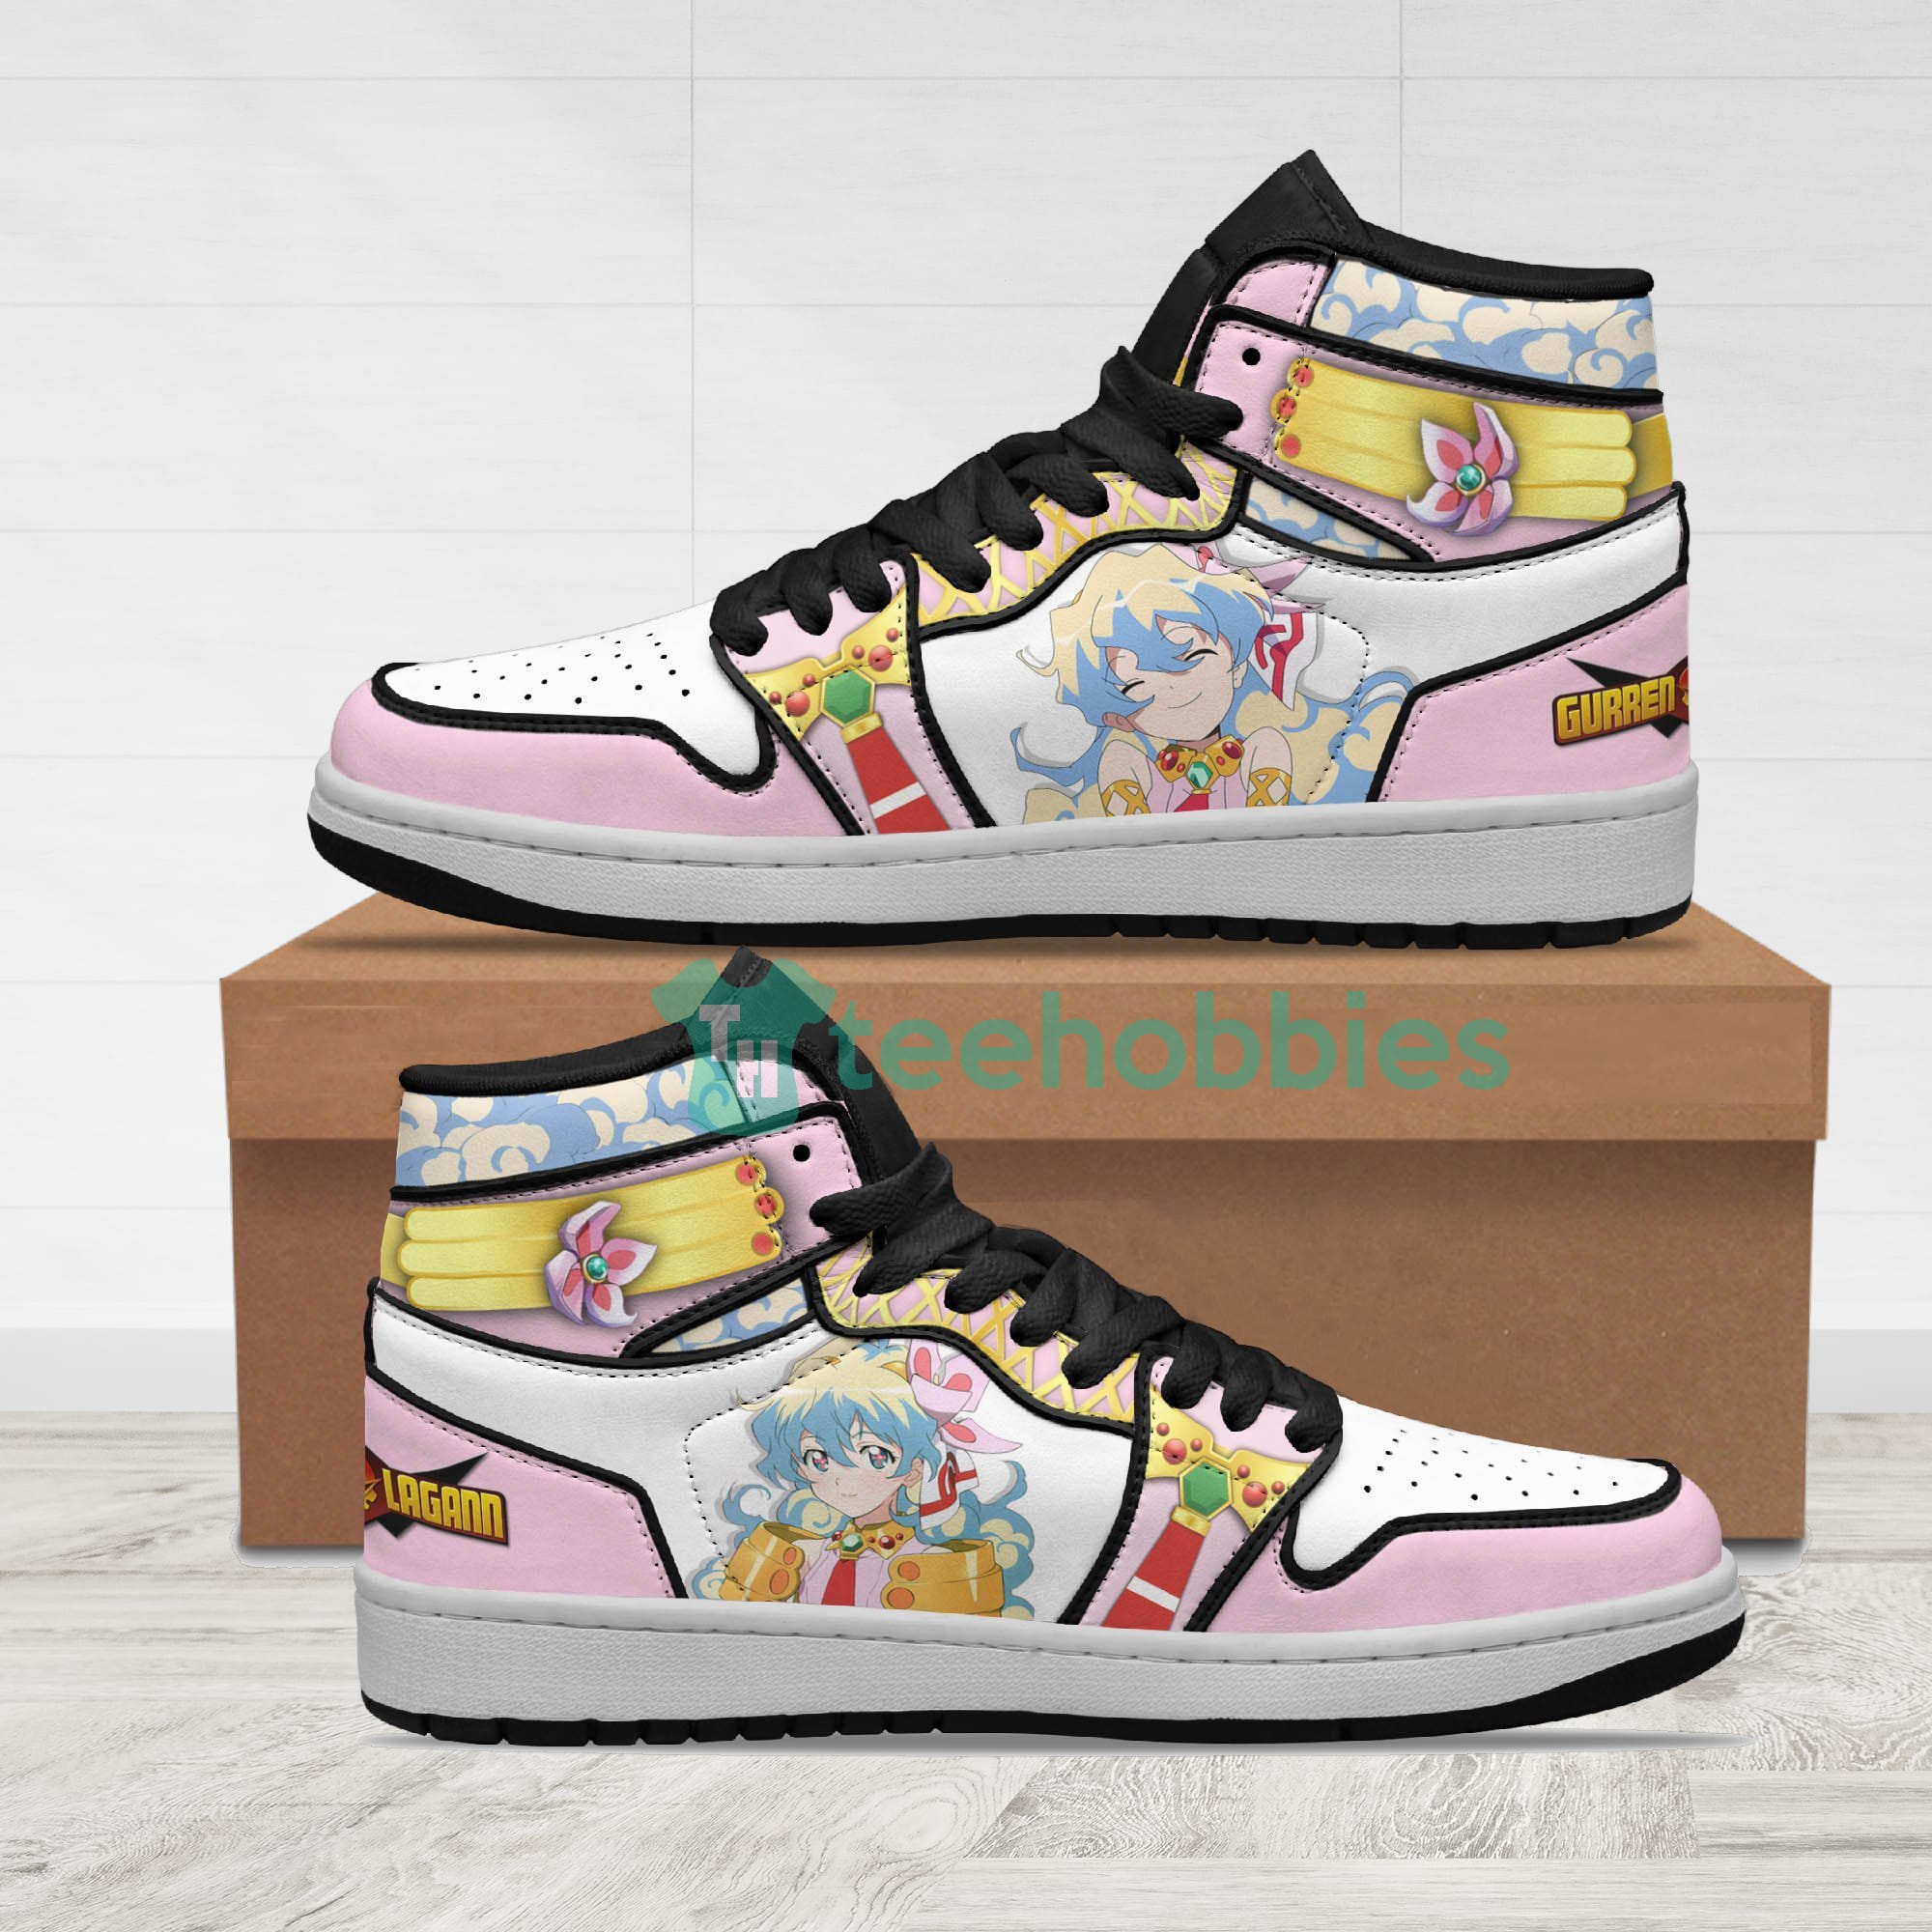 Nia Teppelin Anime Anime Gurren Lagann Air Jordan Hightop Shoes